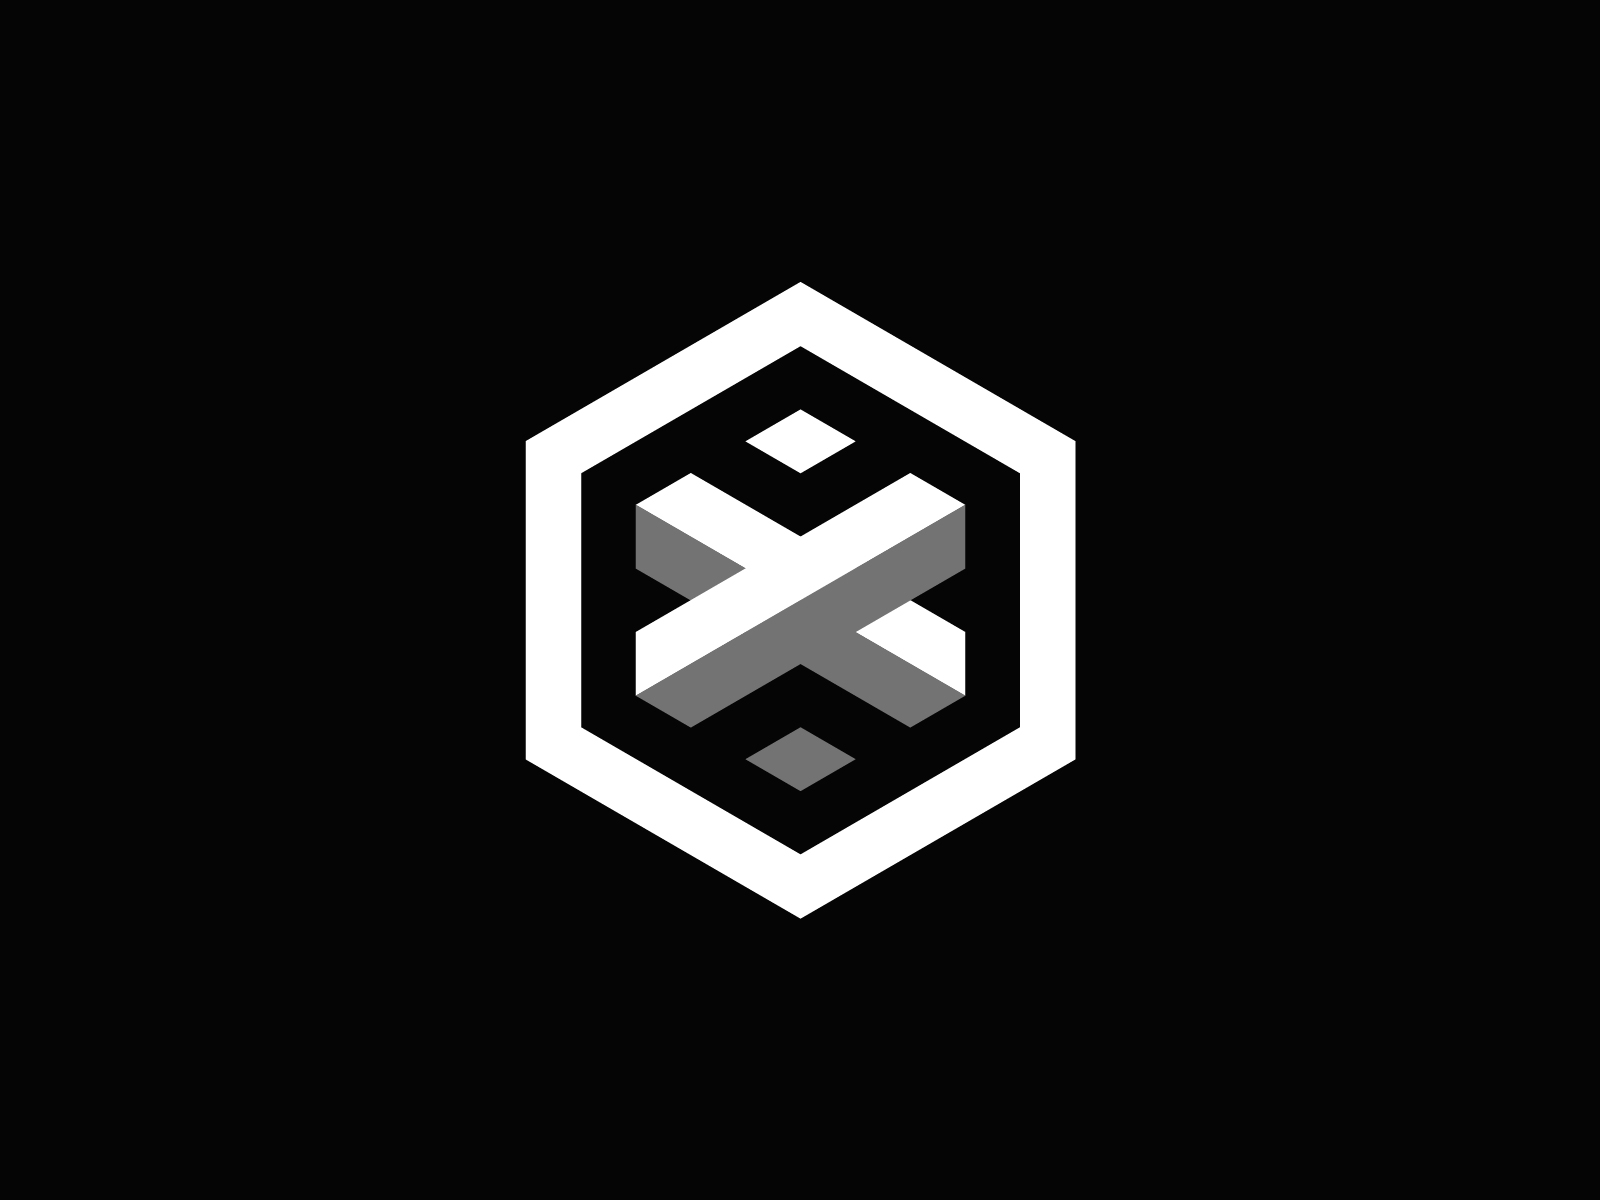 X Lettermark Logo by Kanades on Dribbble